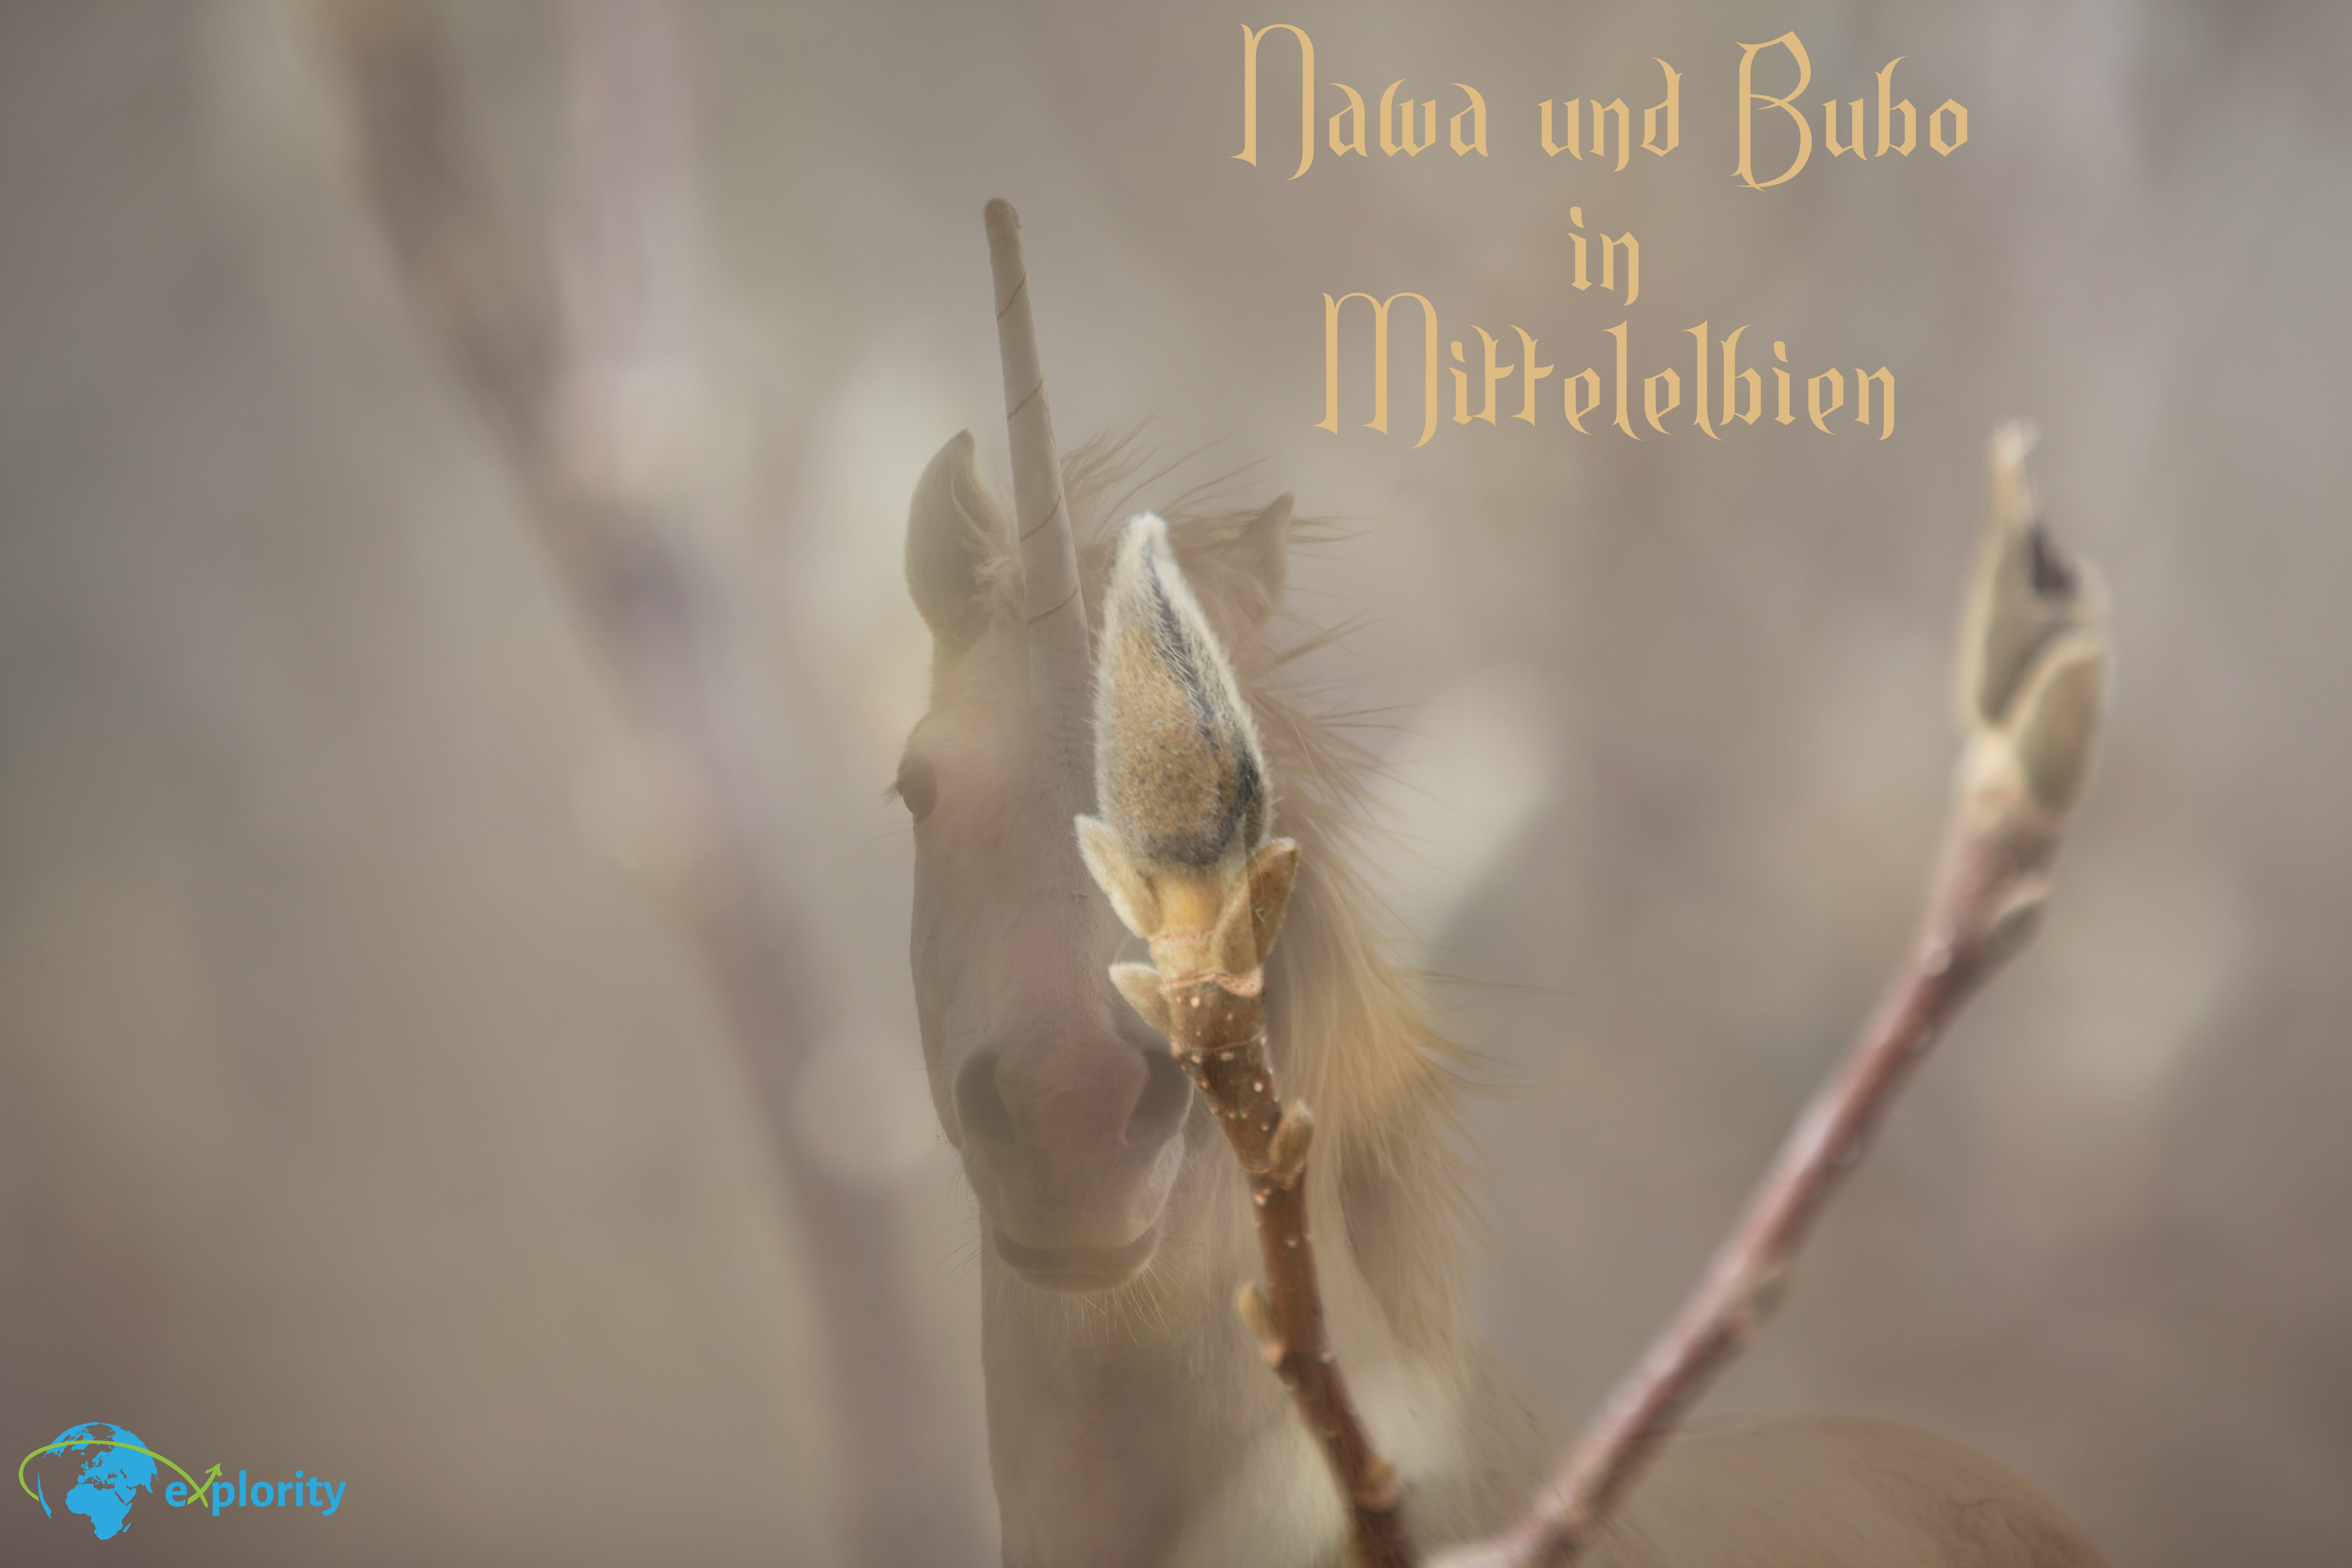 Nawa & Bubo Environmental Education with Fairytales